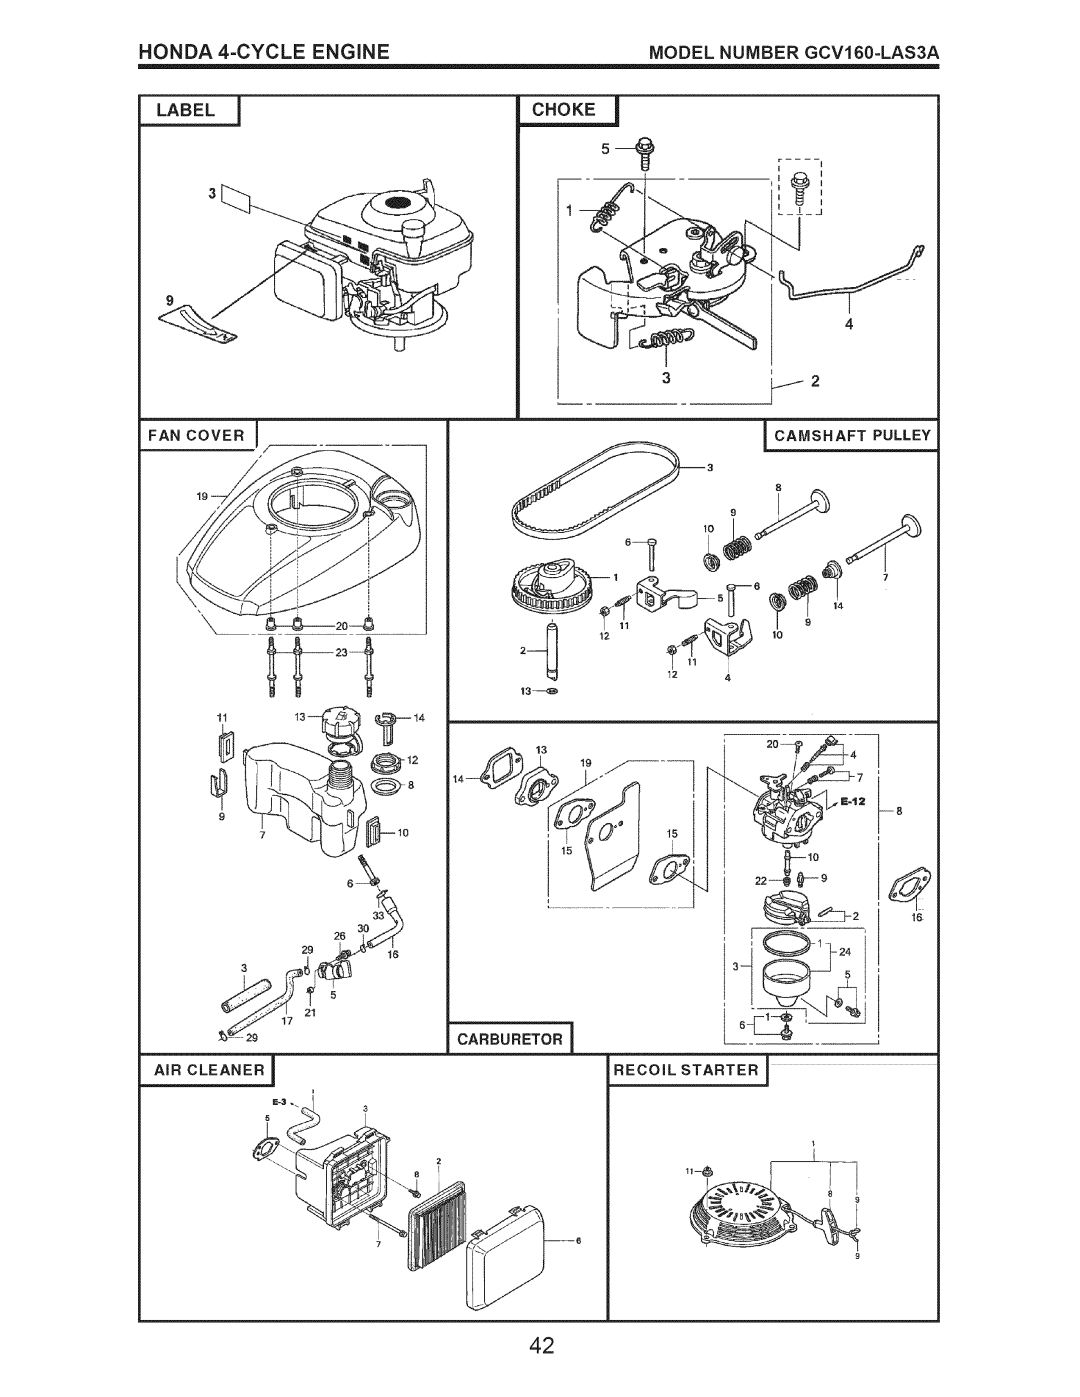 Craftsman 917.376543 manual HONDA 4-CYCLEENGINE, Label 